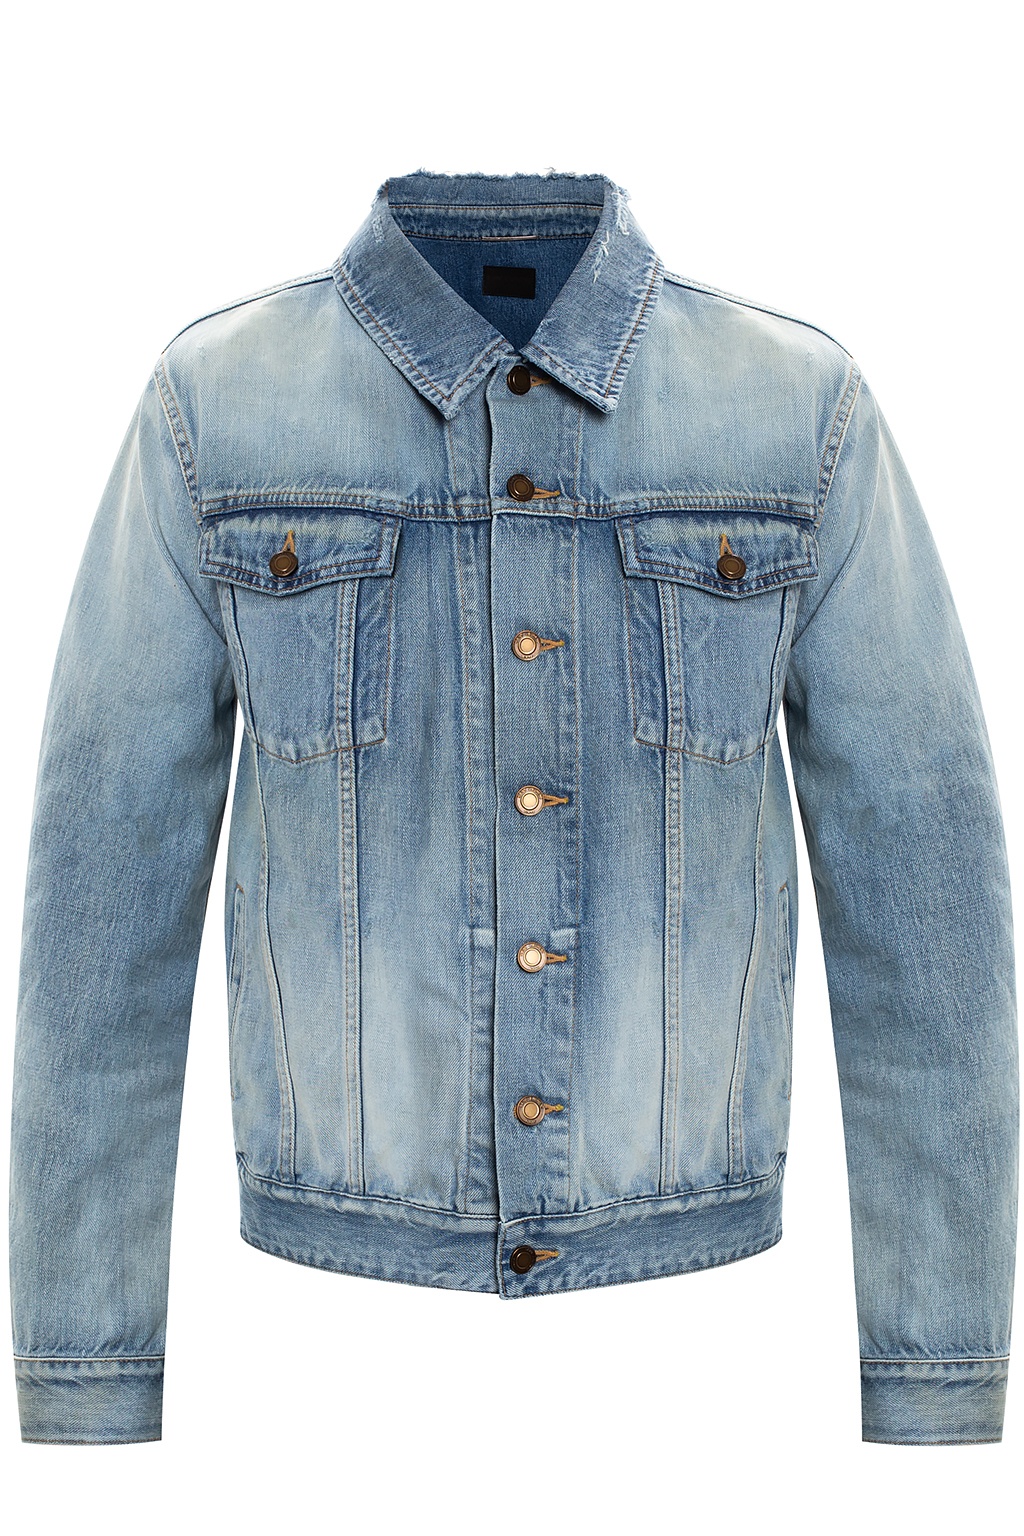 Saint Laurent Denim jacket | Men's Clothing | IetpShops